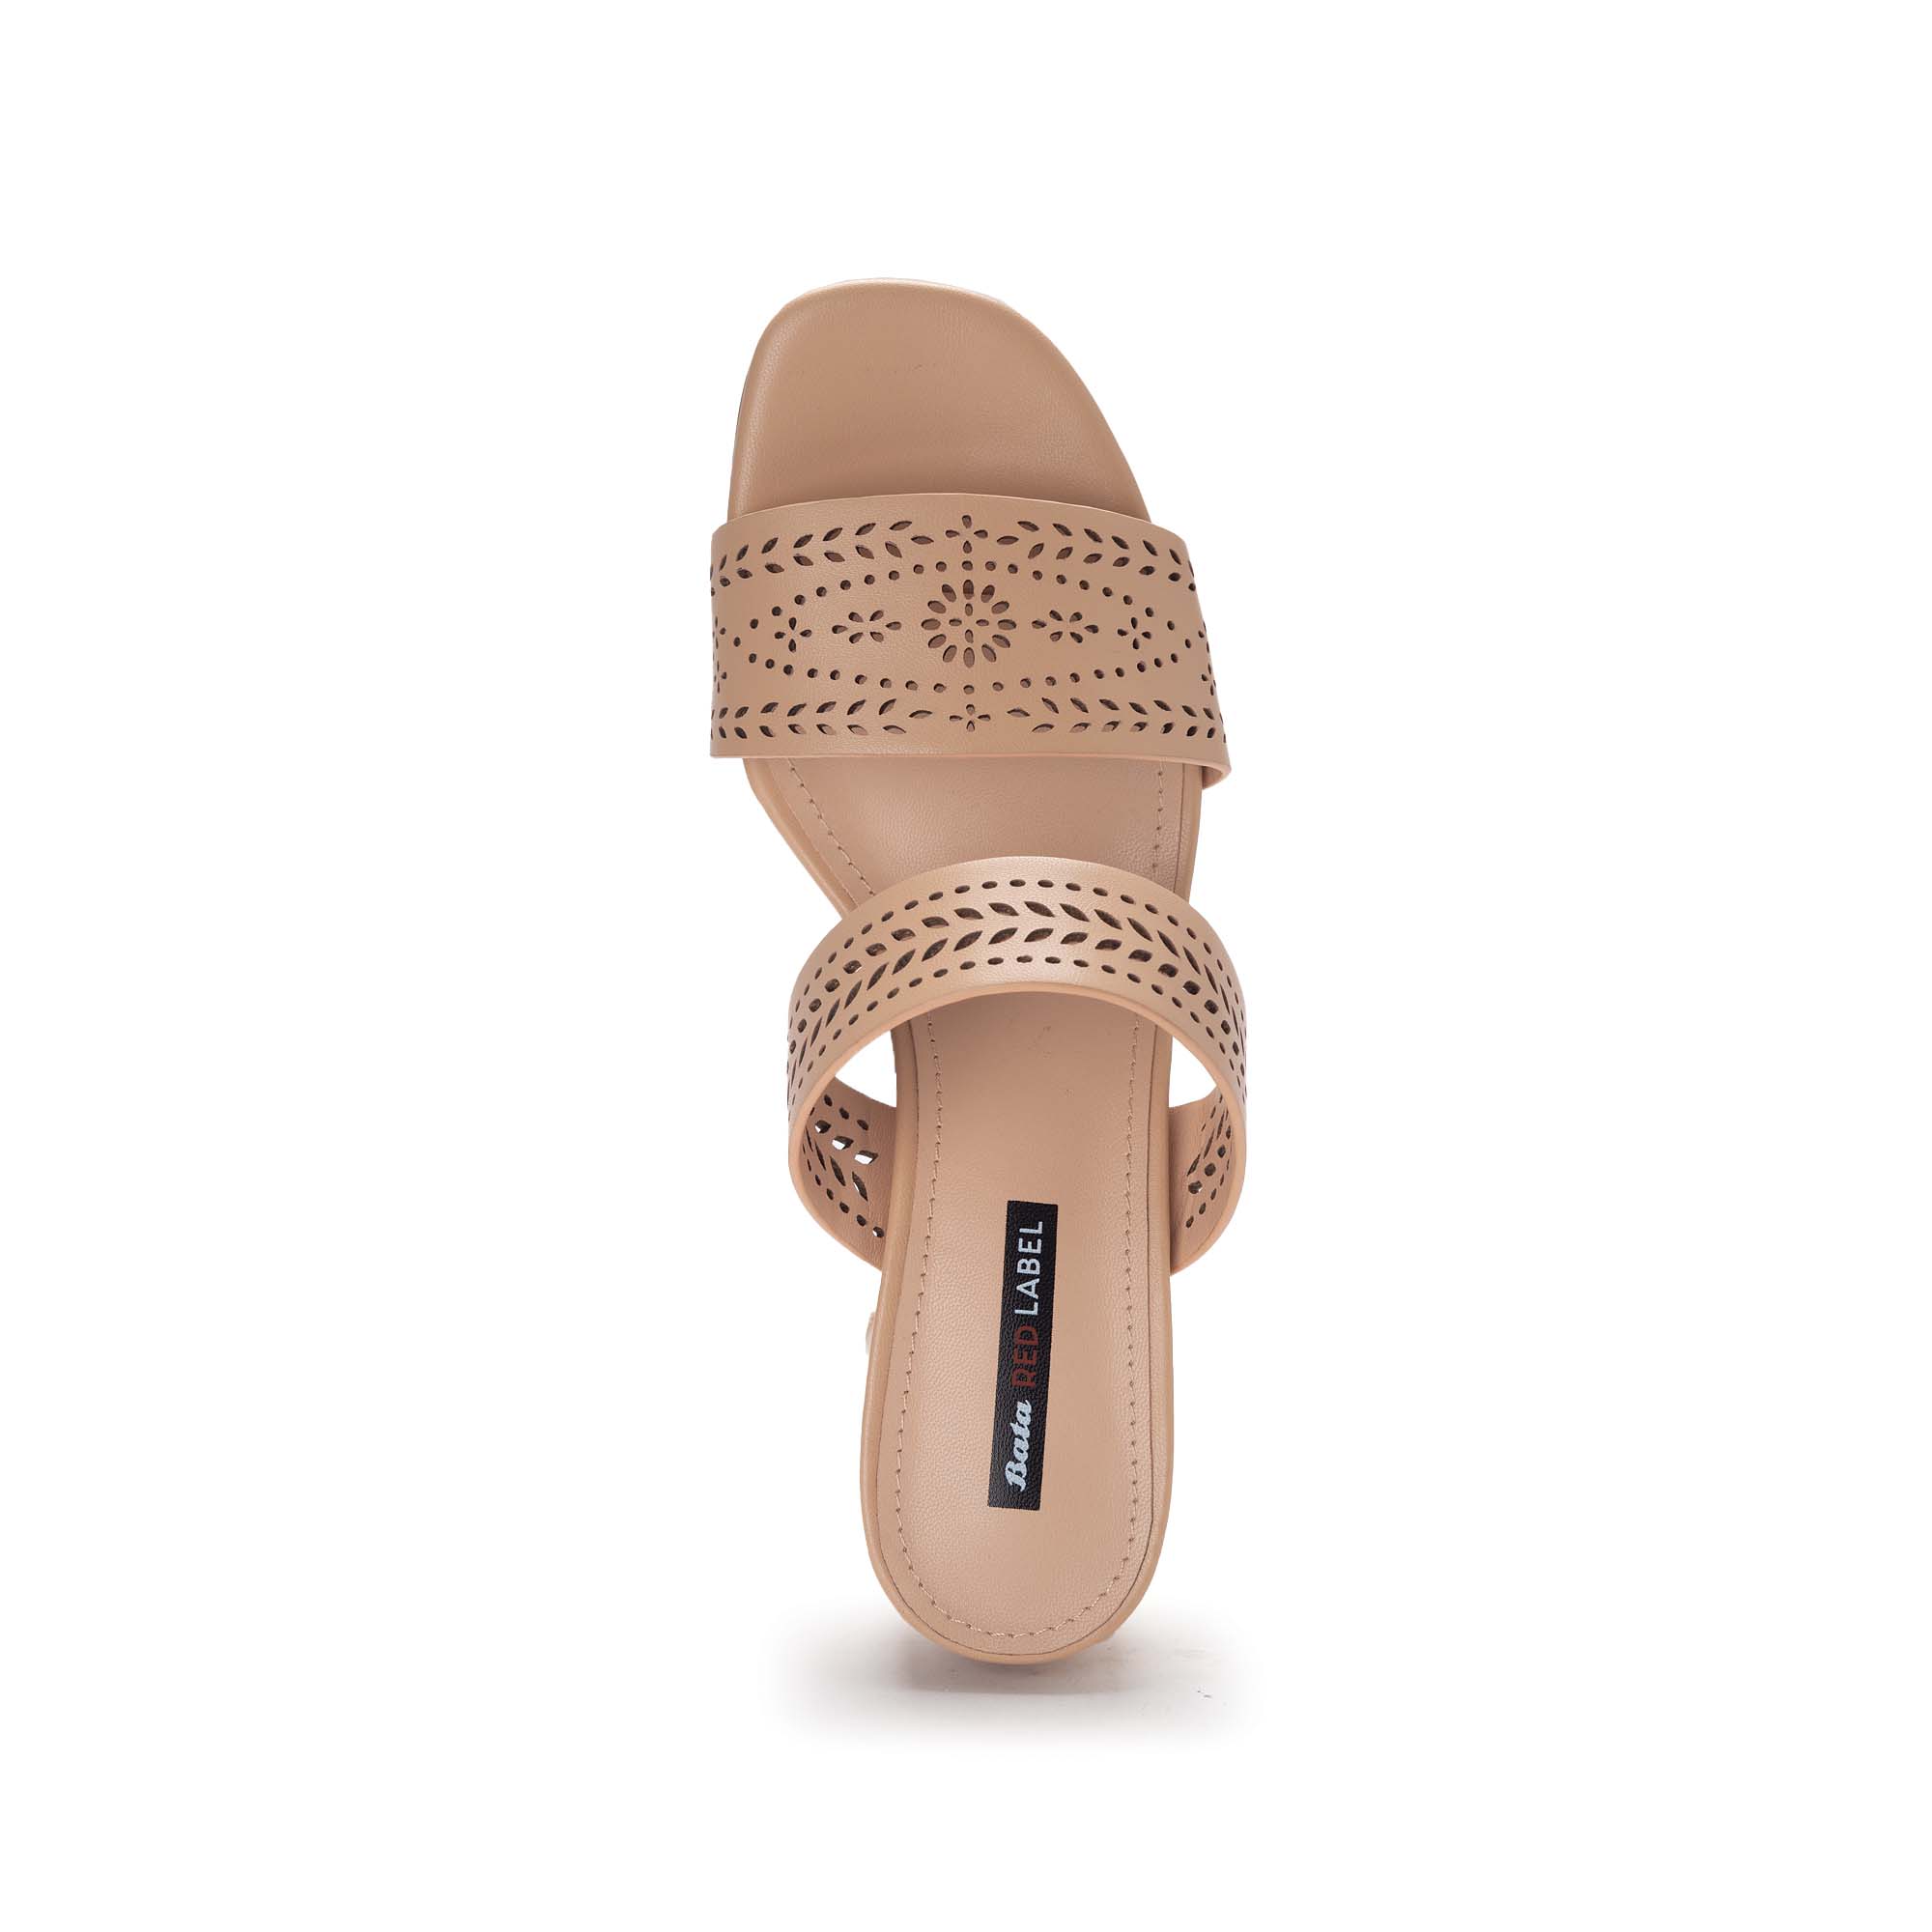 BATA womens Anjali Sandal Fashion Sandals Hook & Loop Synthetic Block Heel  2.5 | eBay